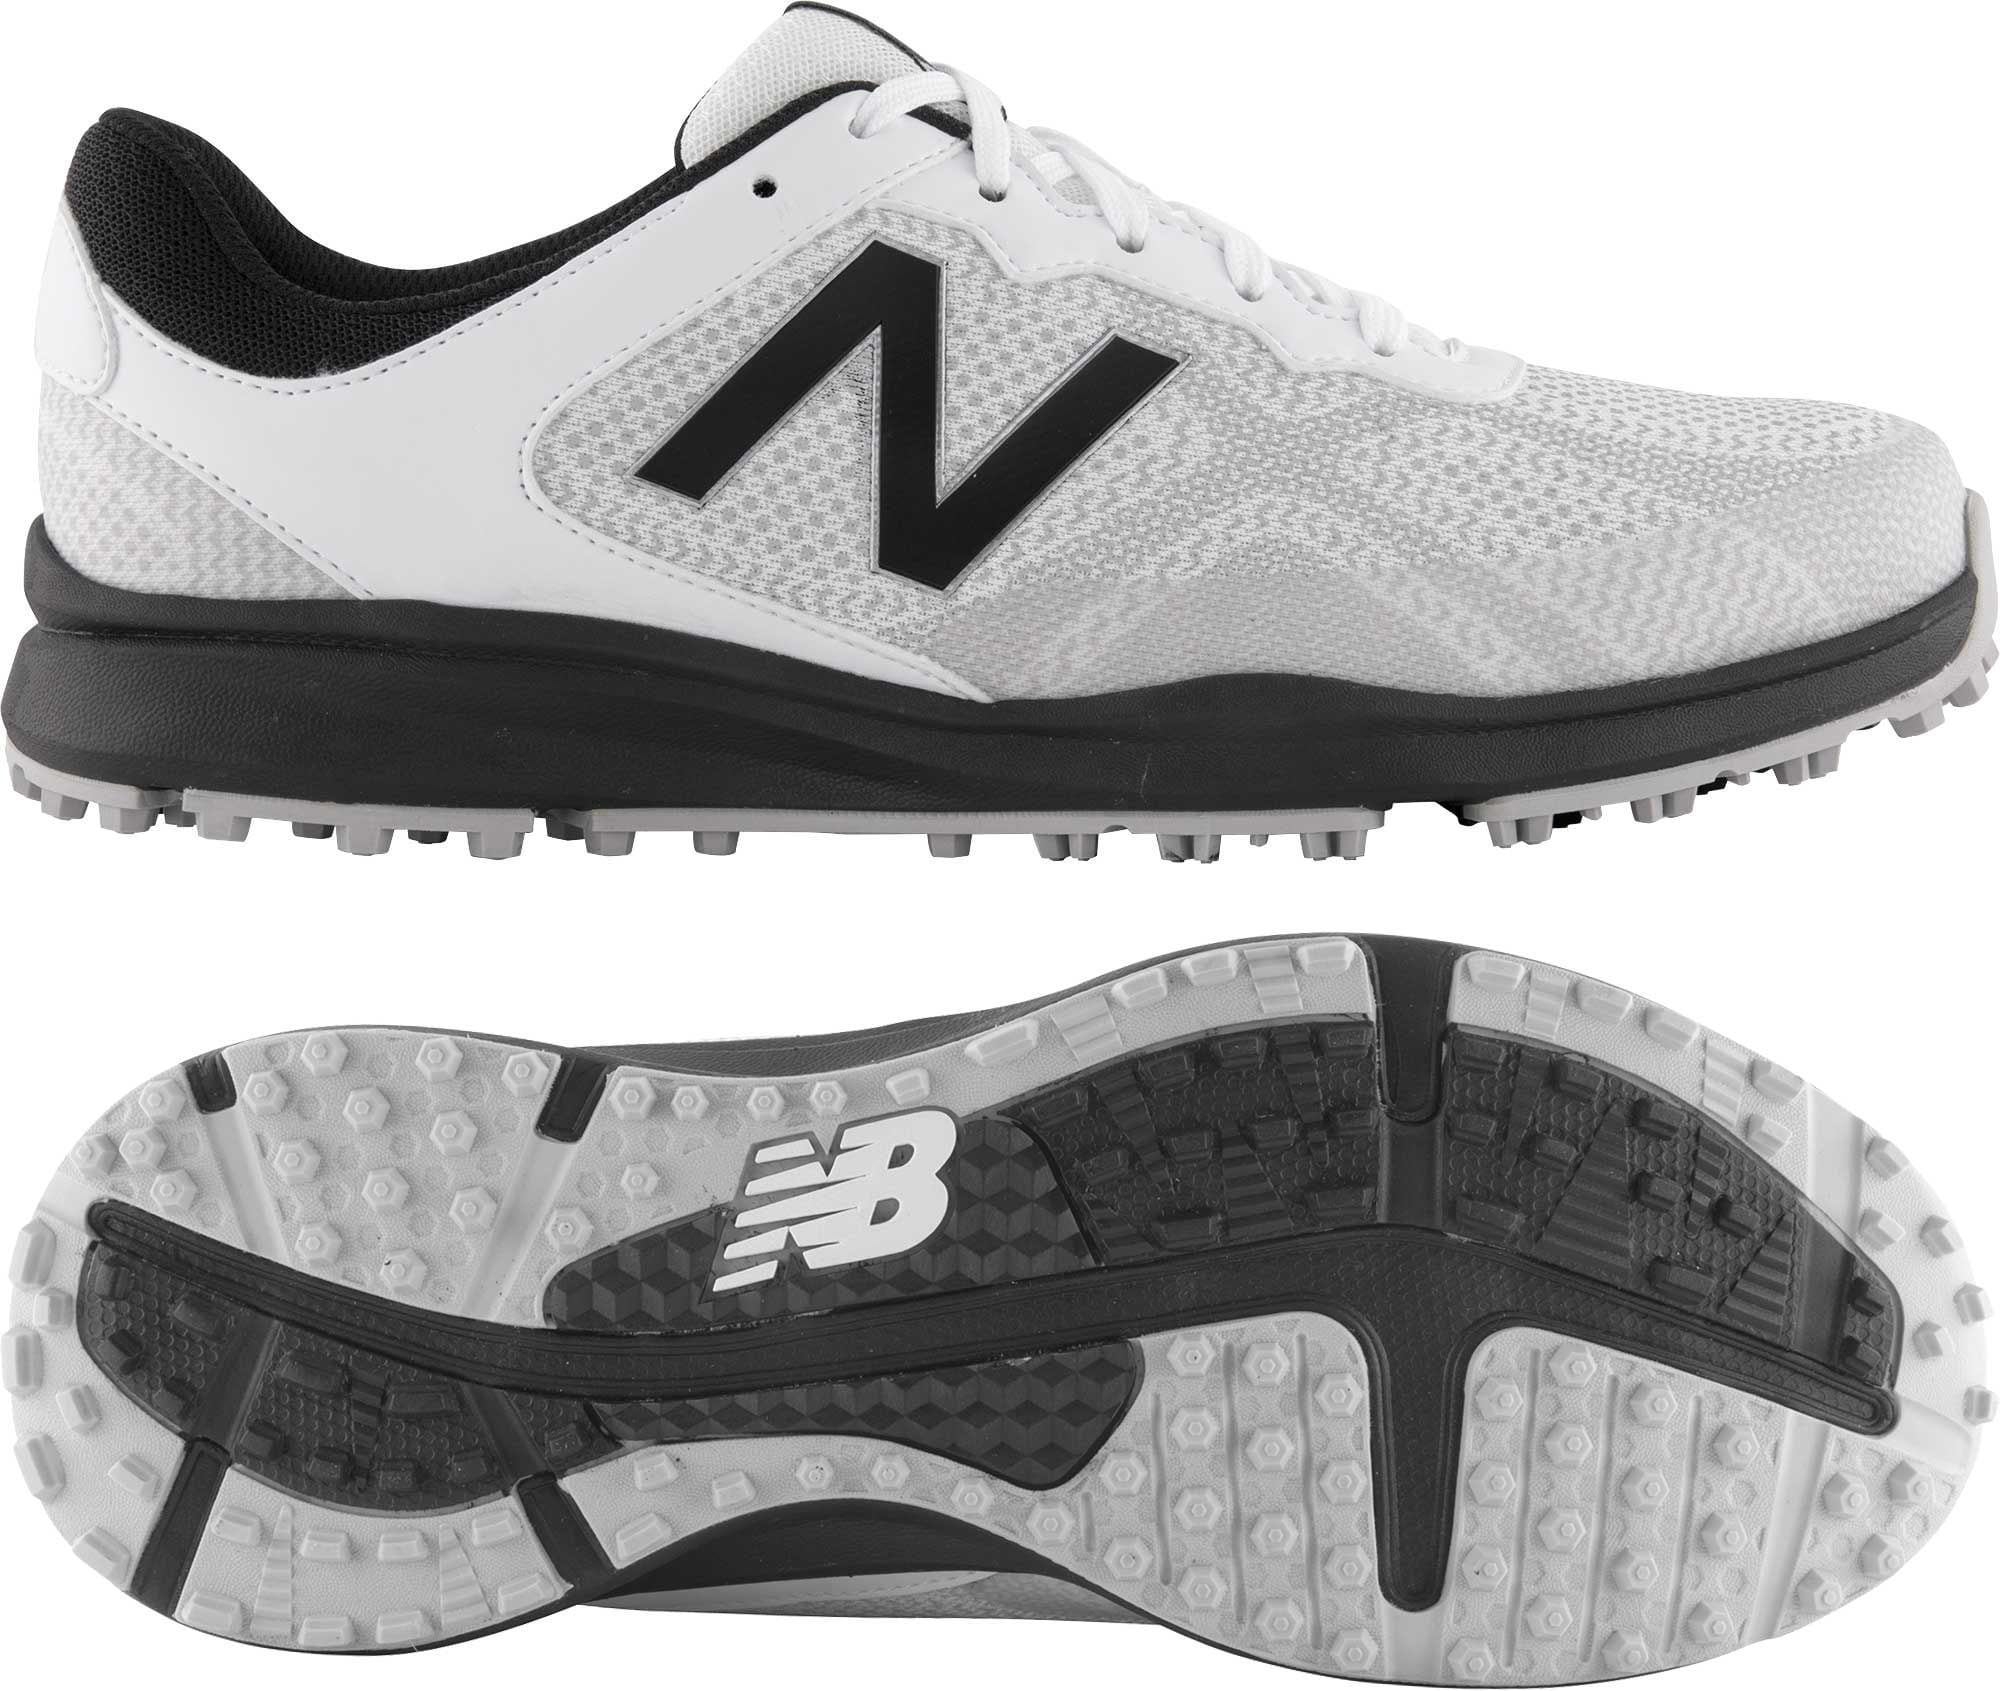 New Balance Men's Breeze Golf Shoes 